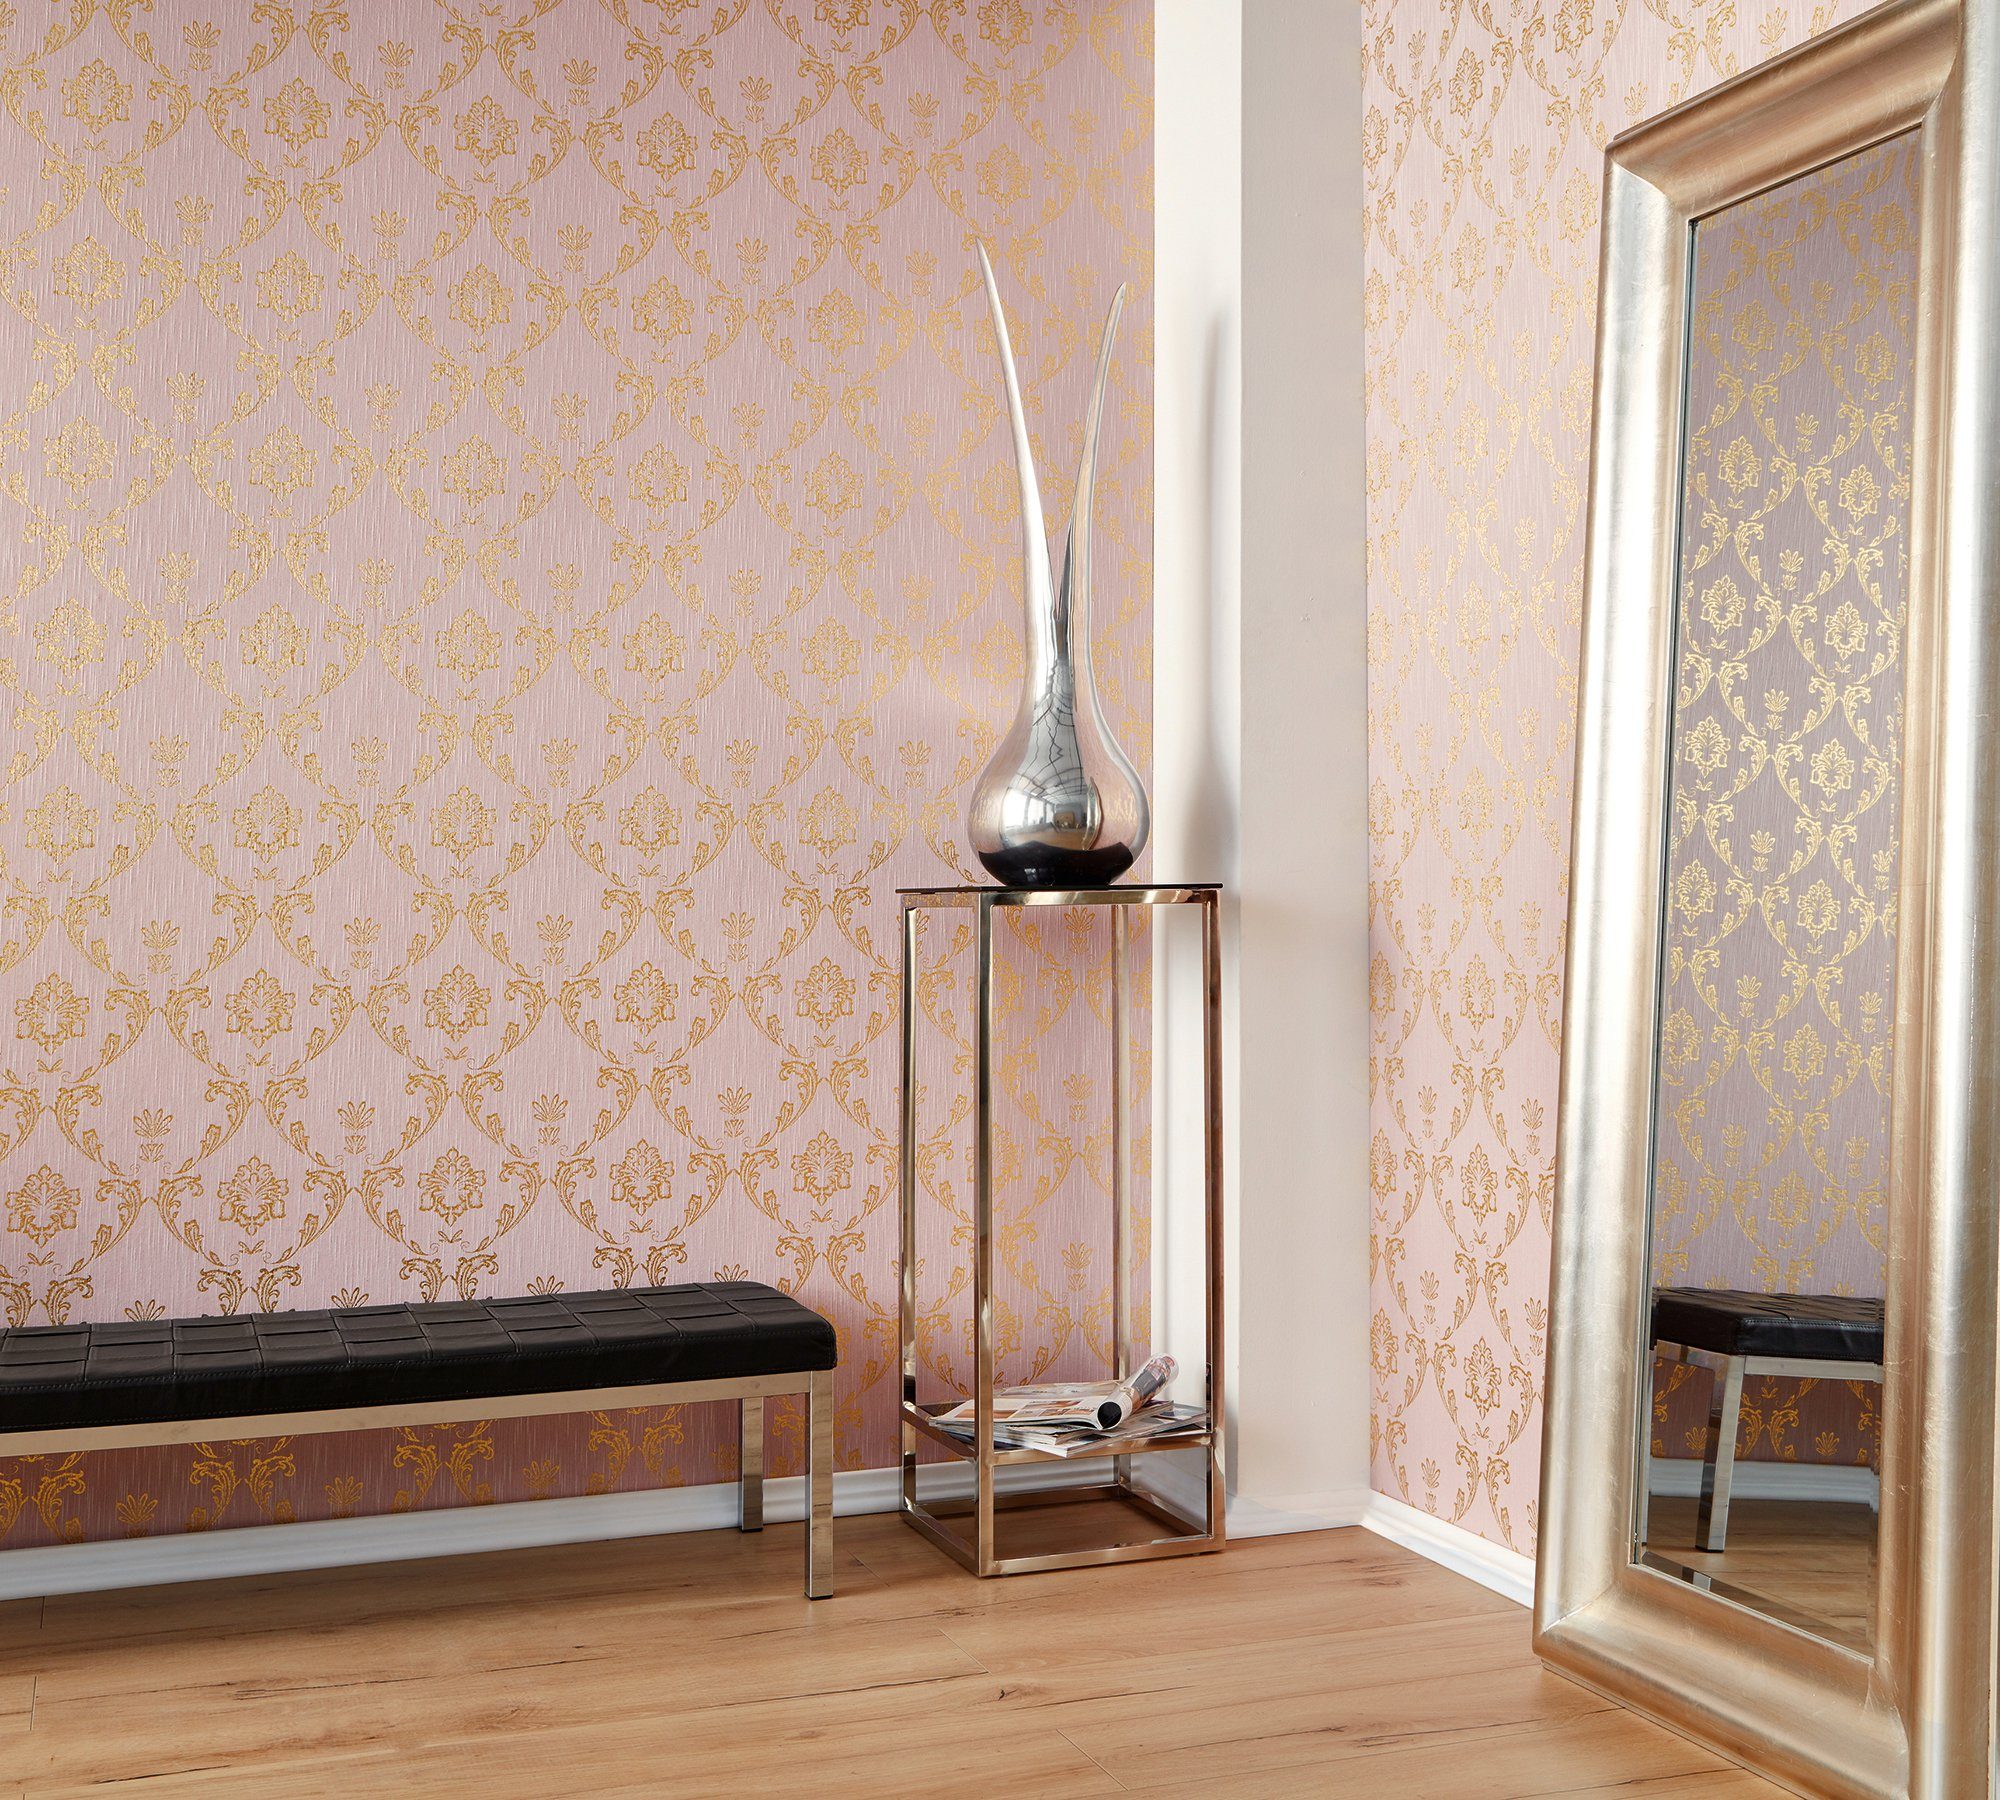 Architects Paper Textiltapete Metallic Silk, glänzend, Ornament Barock, samtig, Barock gold/rosa matt, Tapete